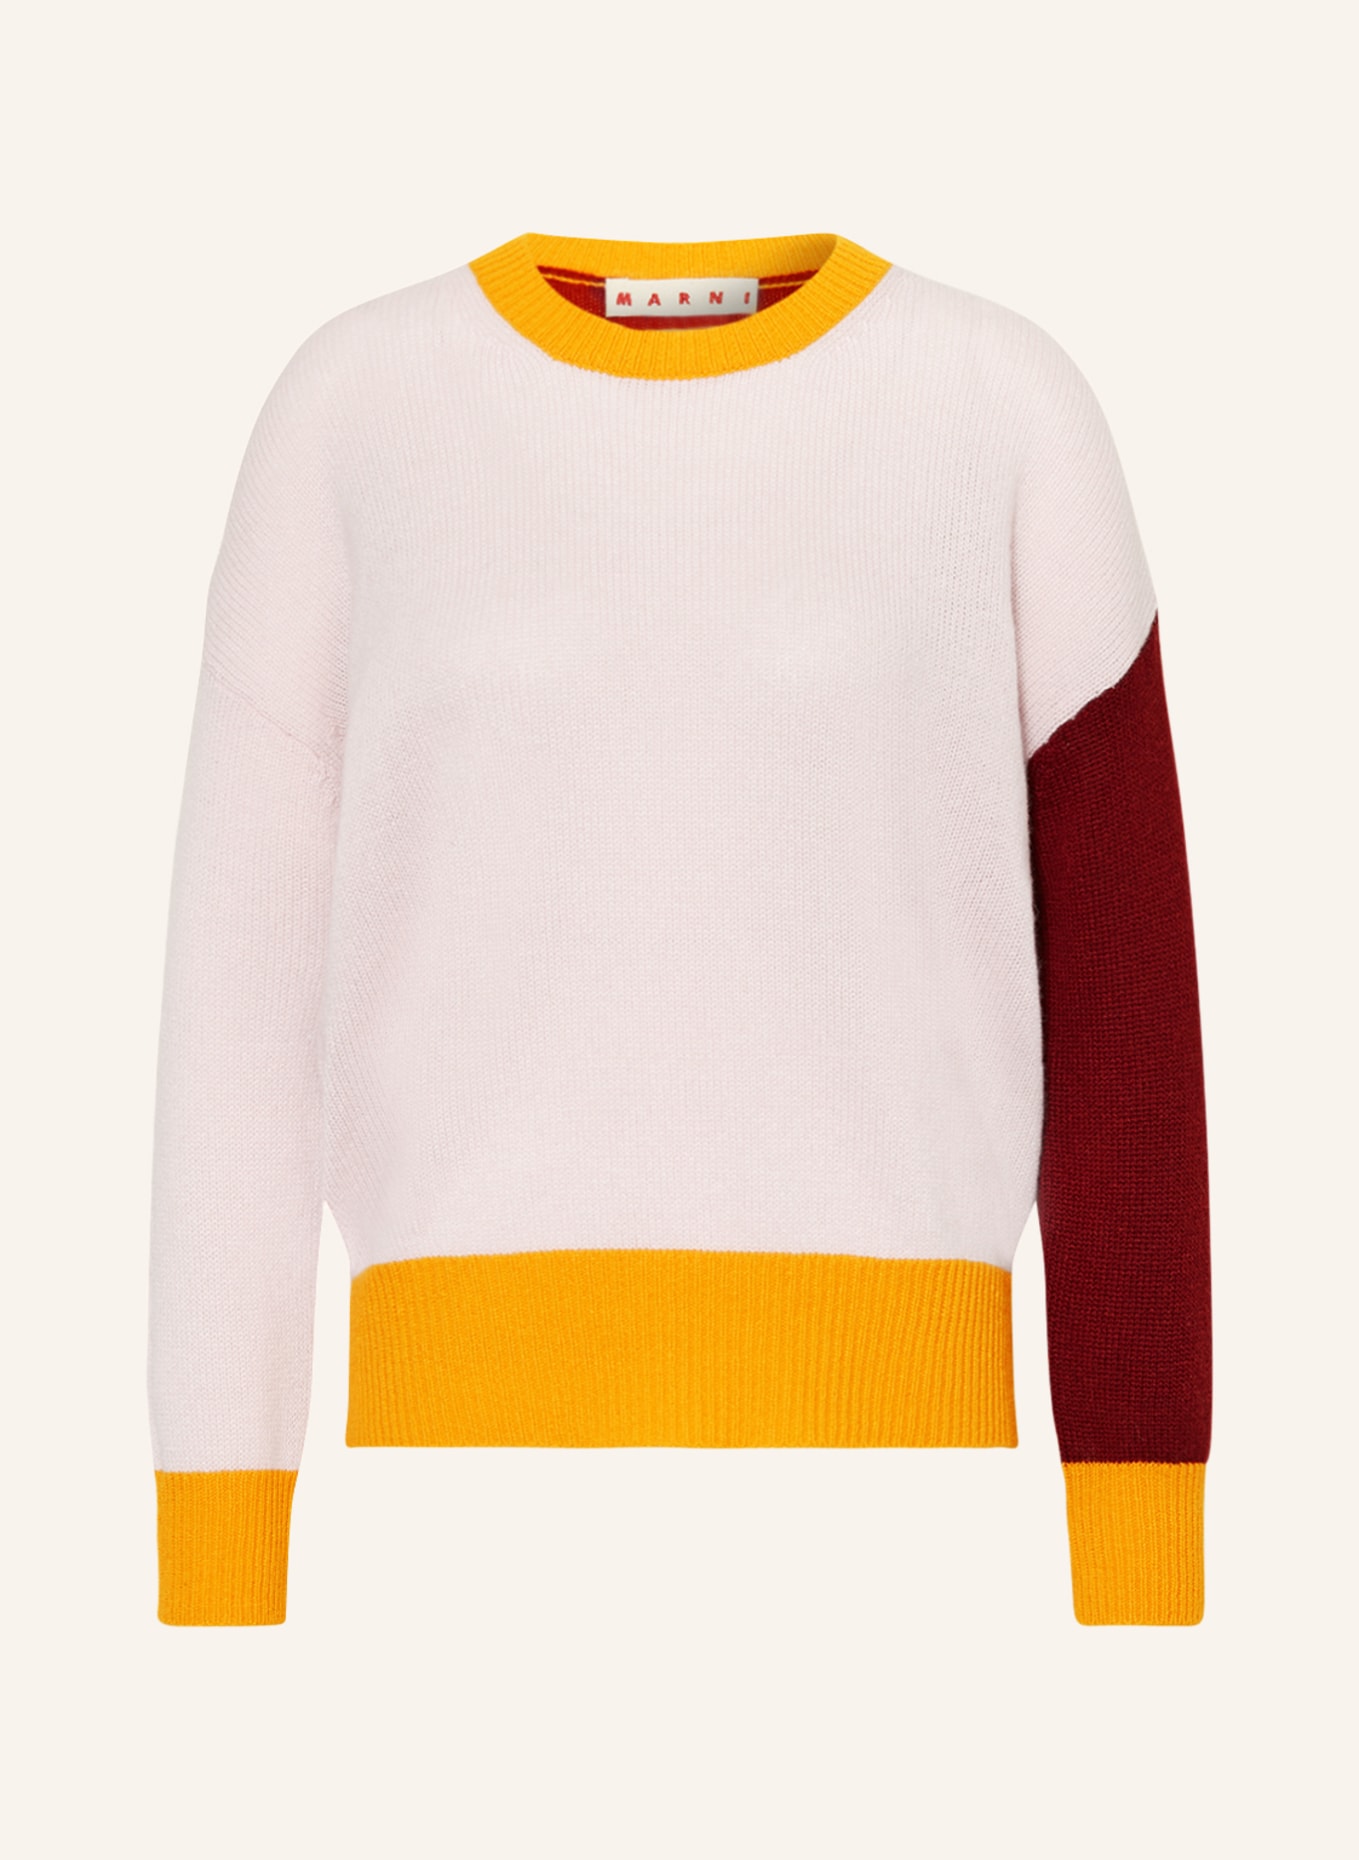 MARNI Cashmere-Pullover, Farbe: DUNKELROT/ DUNKELGELB/ HELLROSA (Bild 1)